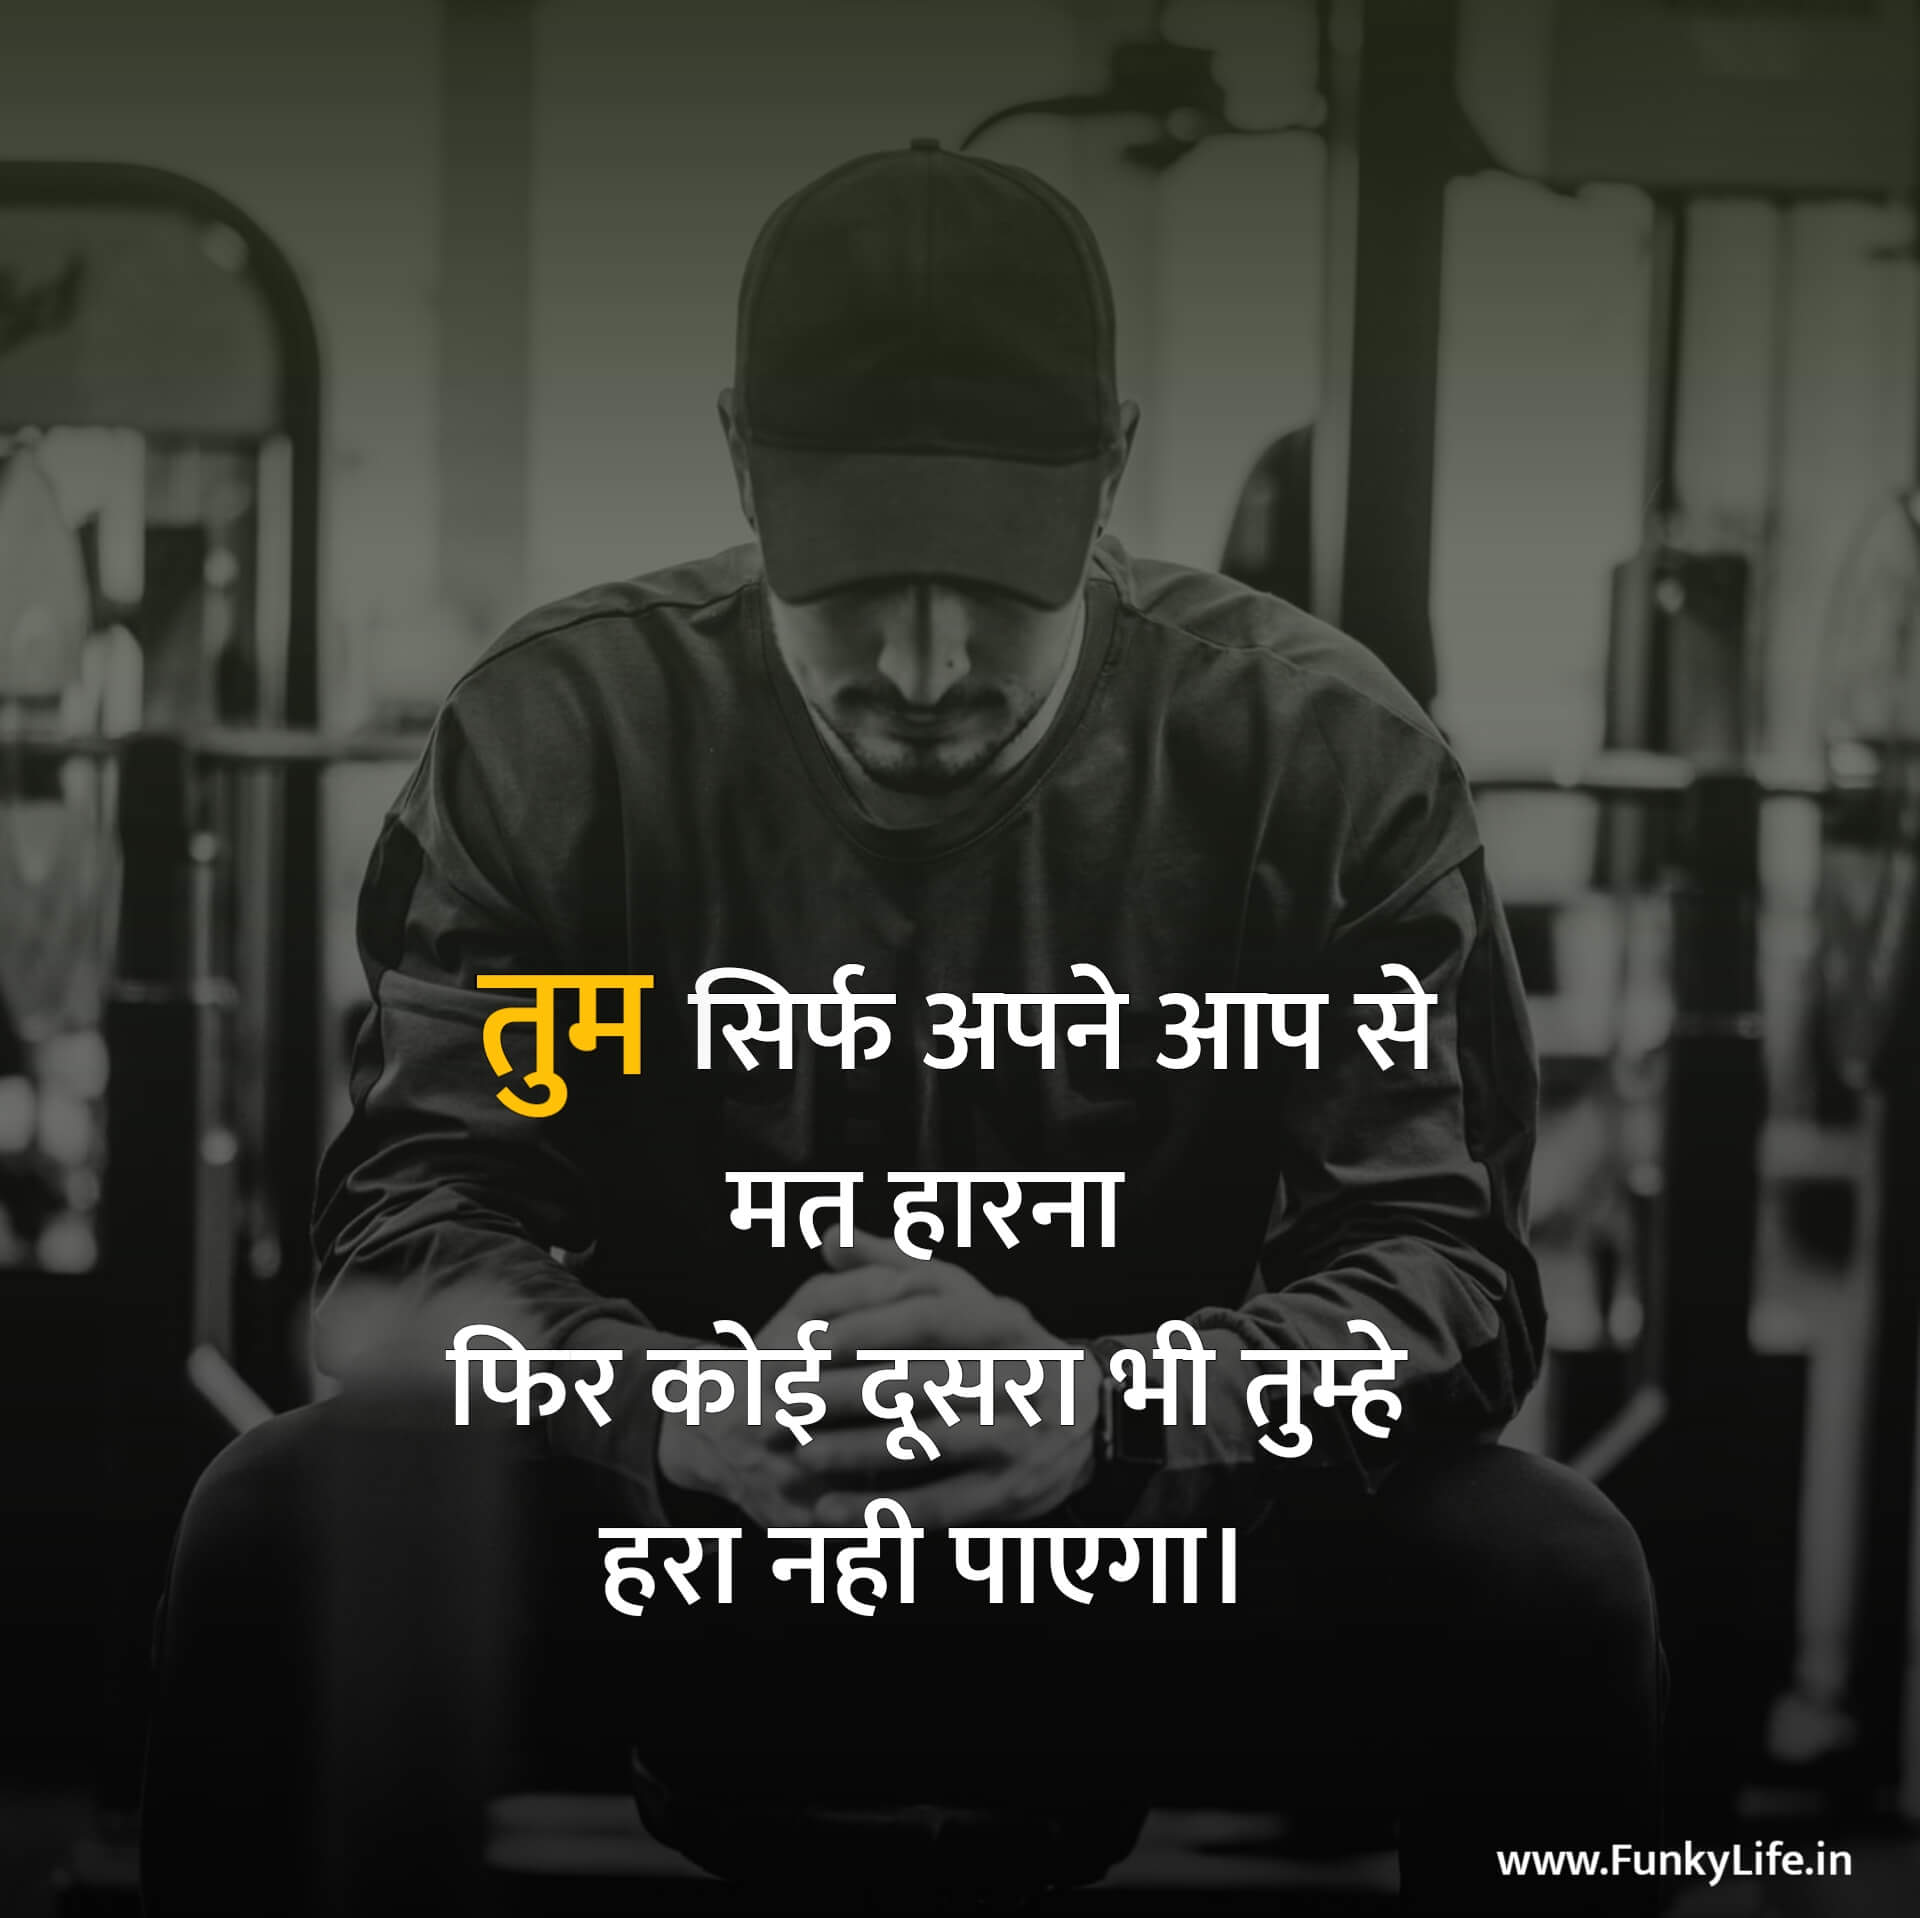 Hindi Motivational Quote